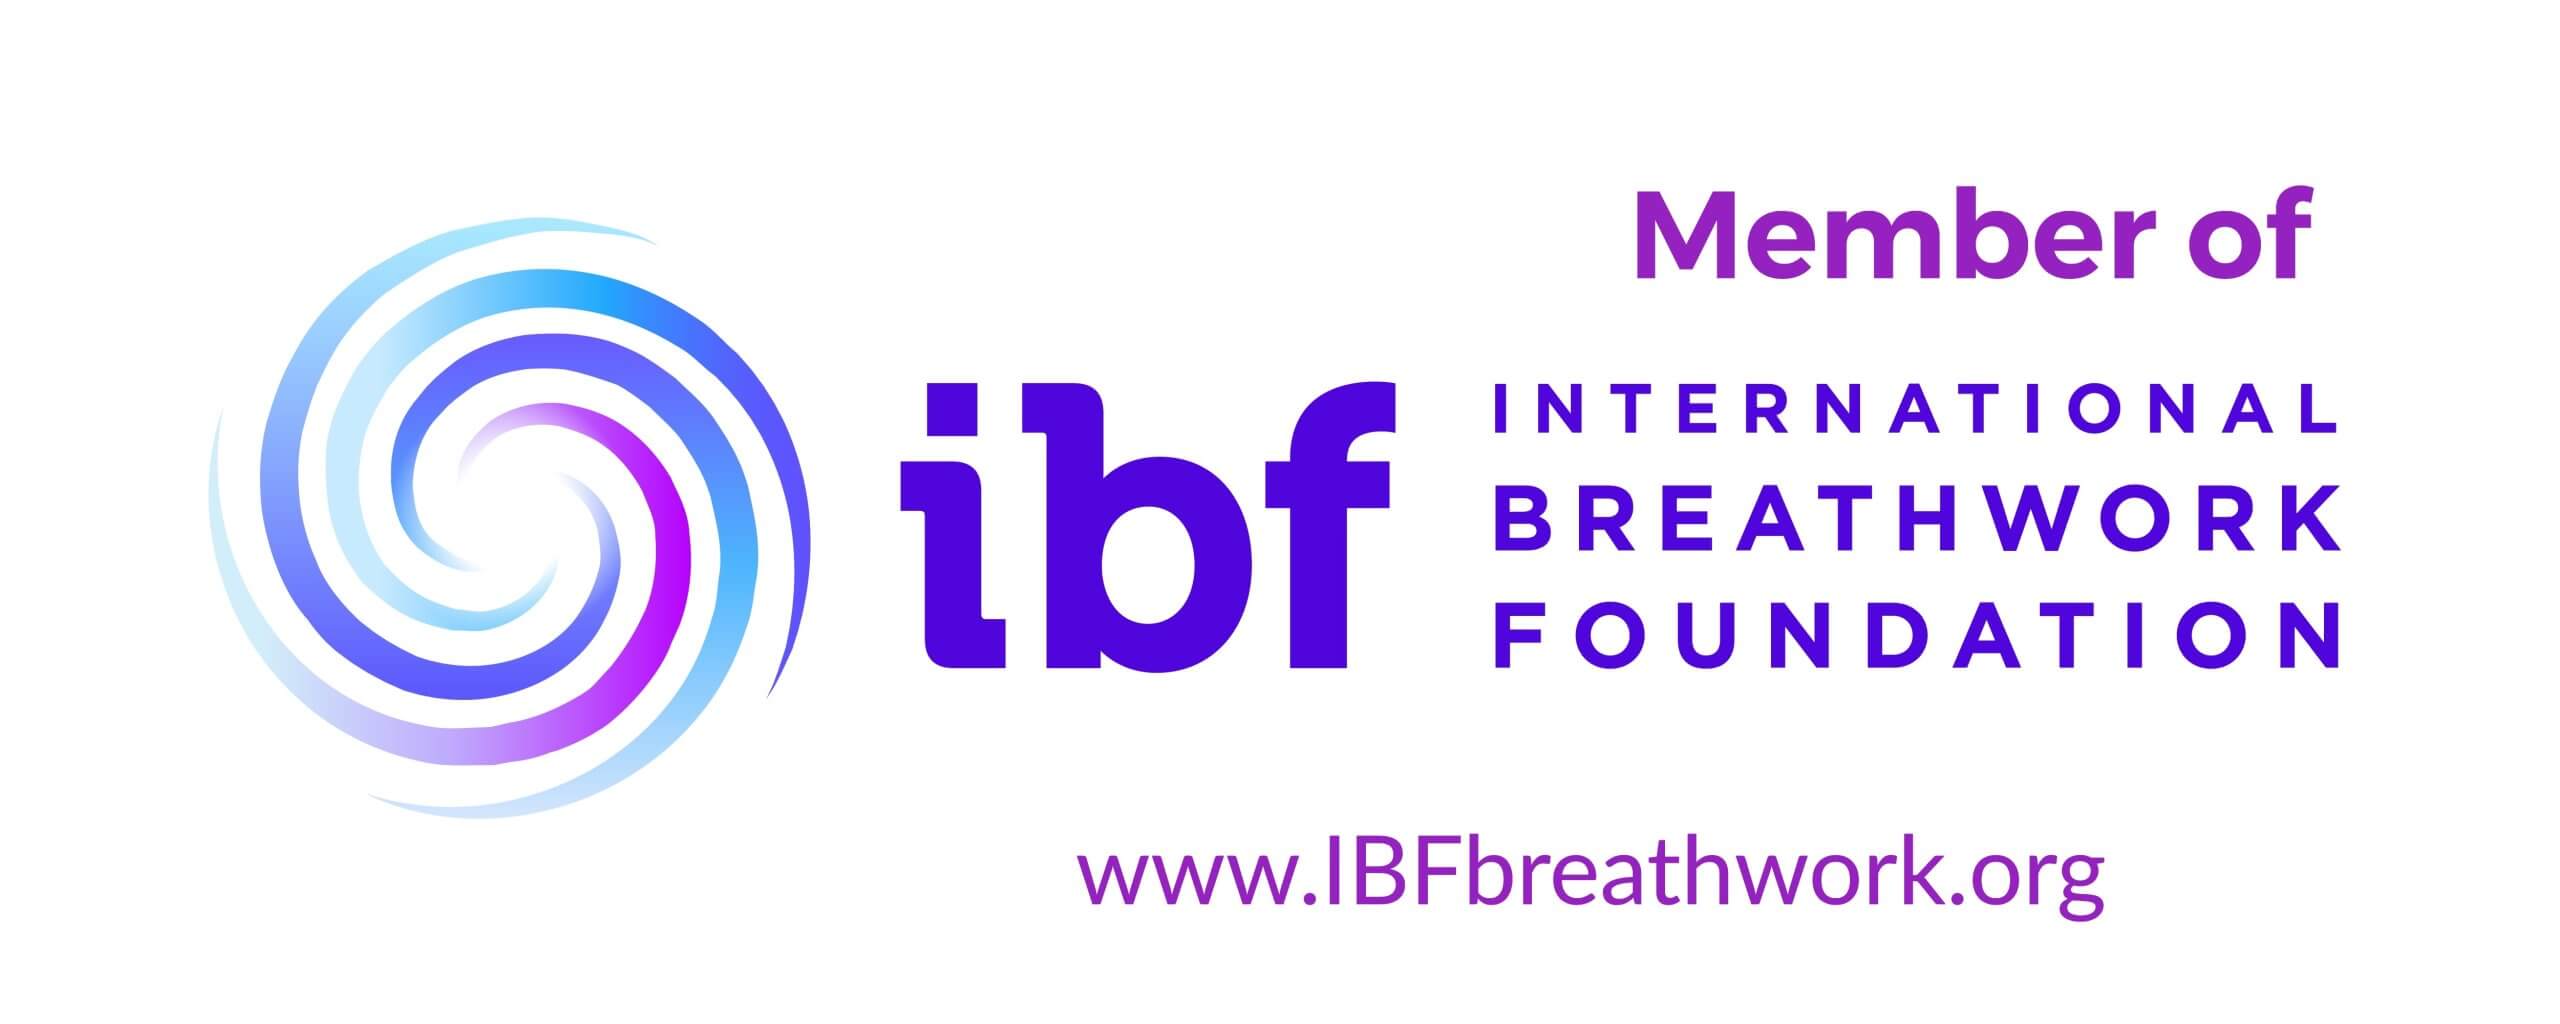 Member of International Breathwork Foundation logo